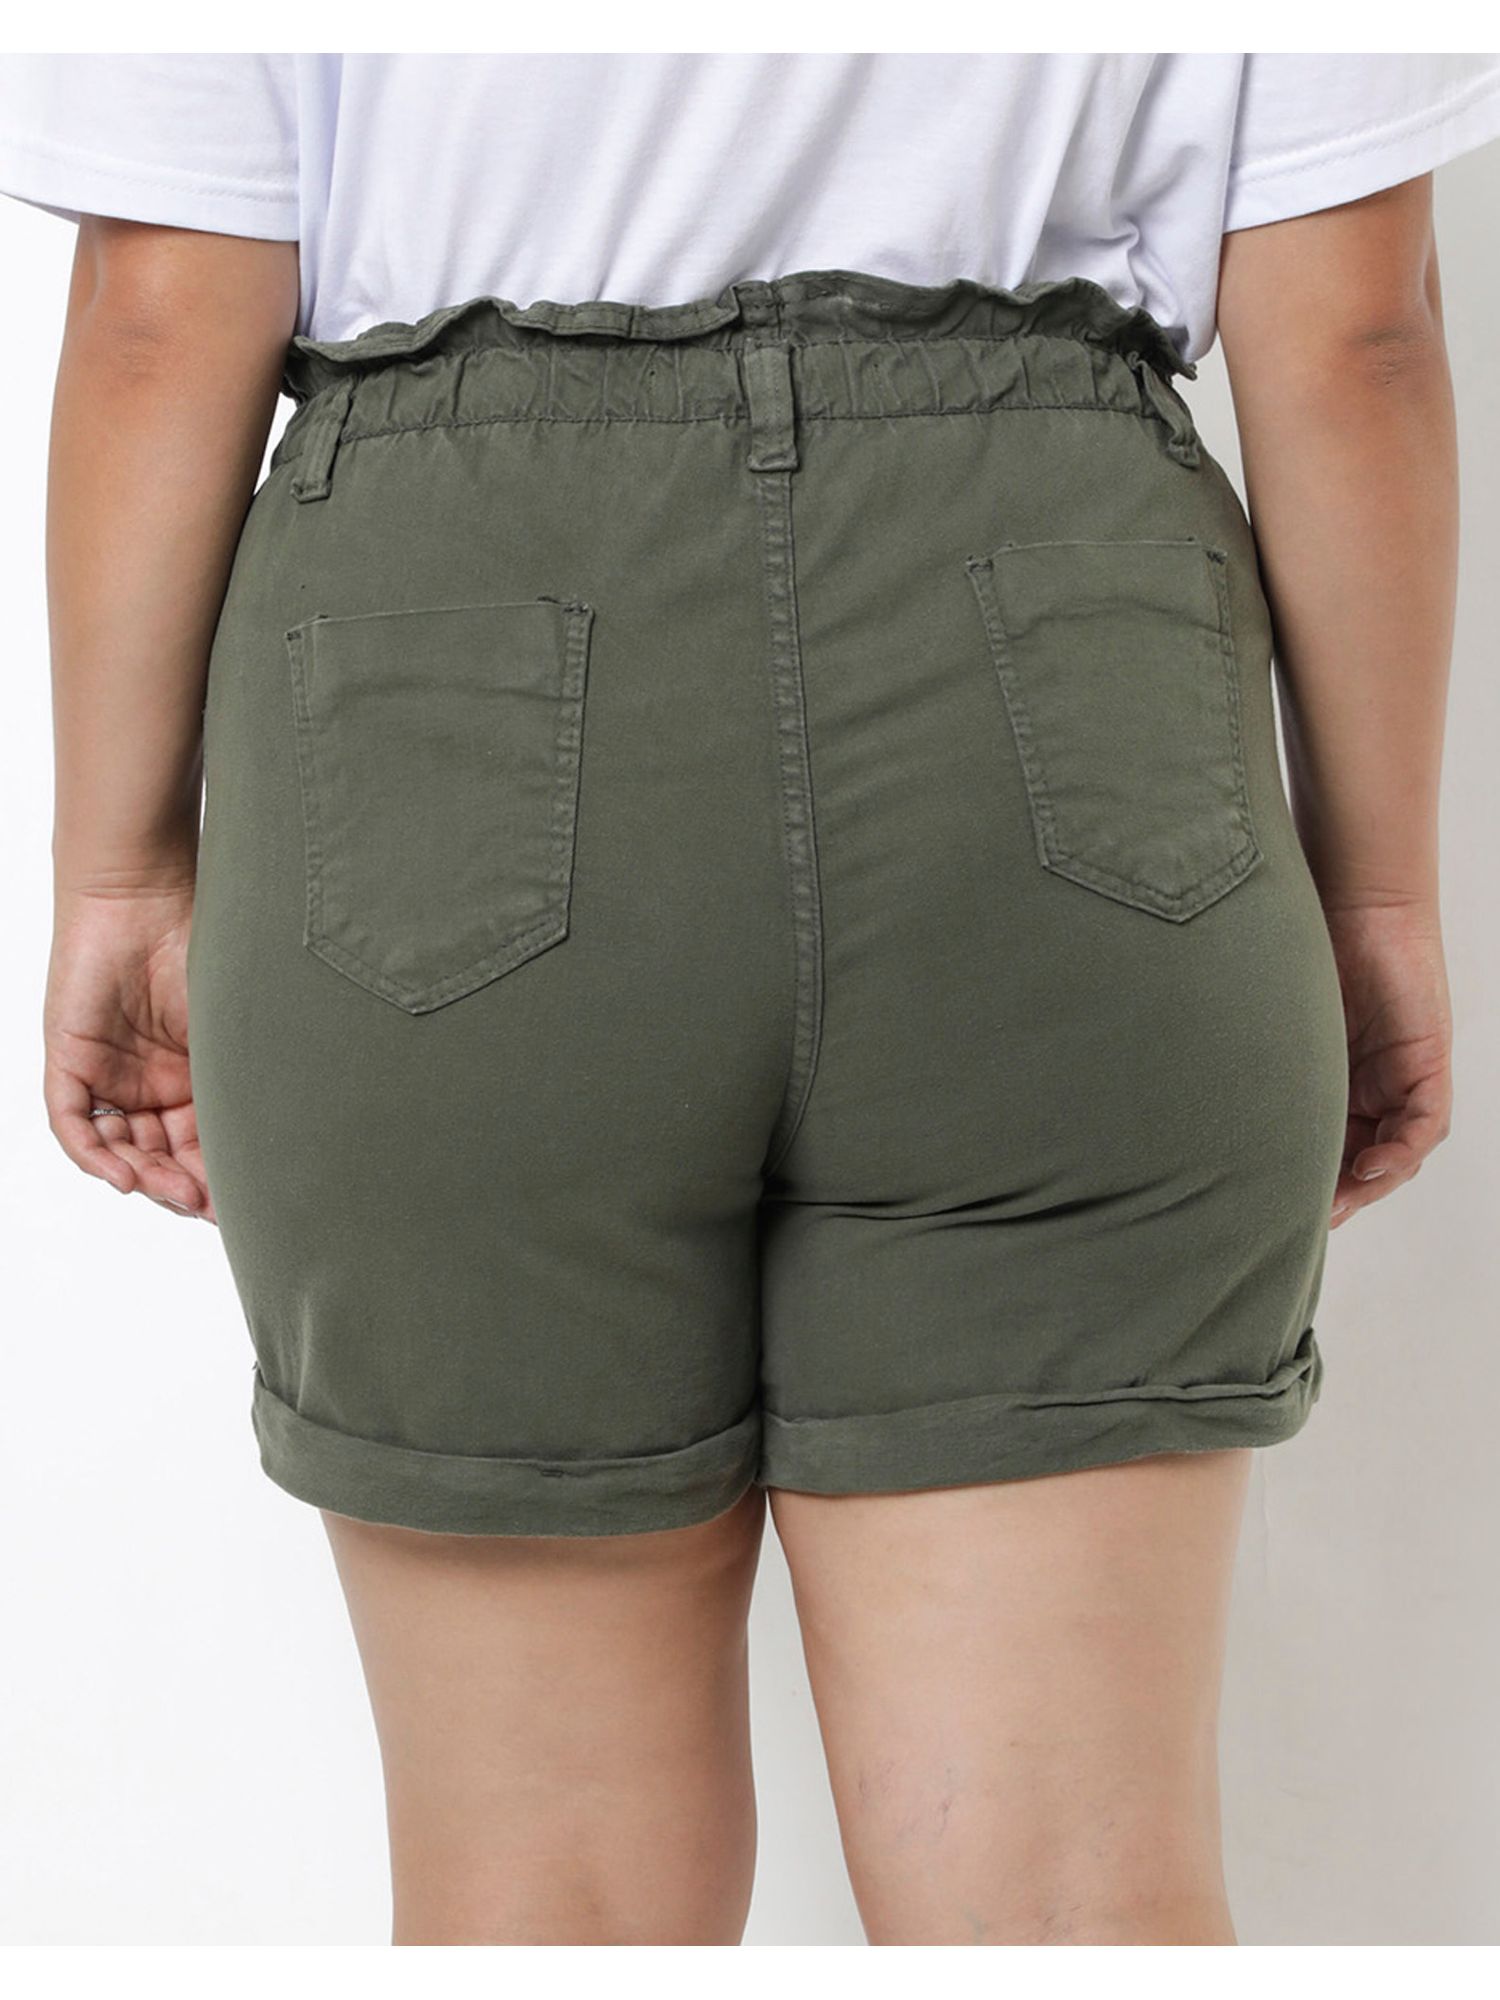 Shorts Sarja Feminino Plus Size c/ Bolso Cargo Plus Size